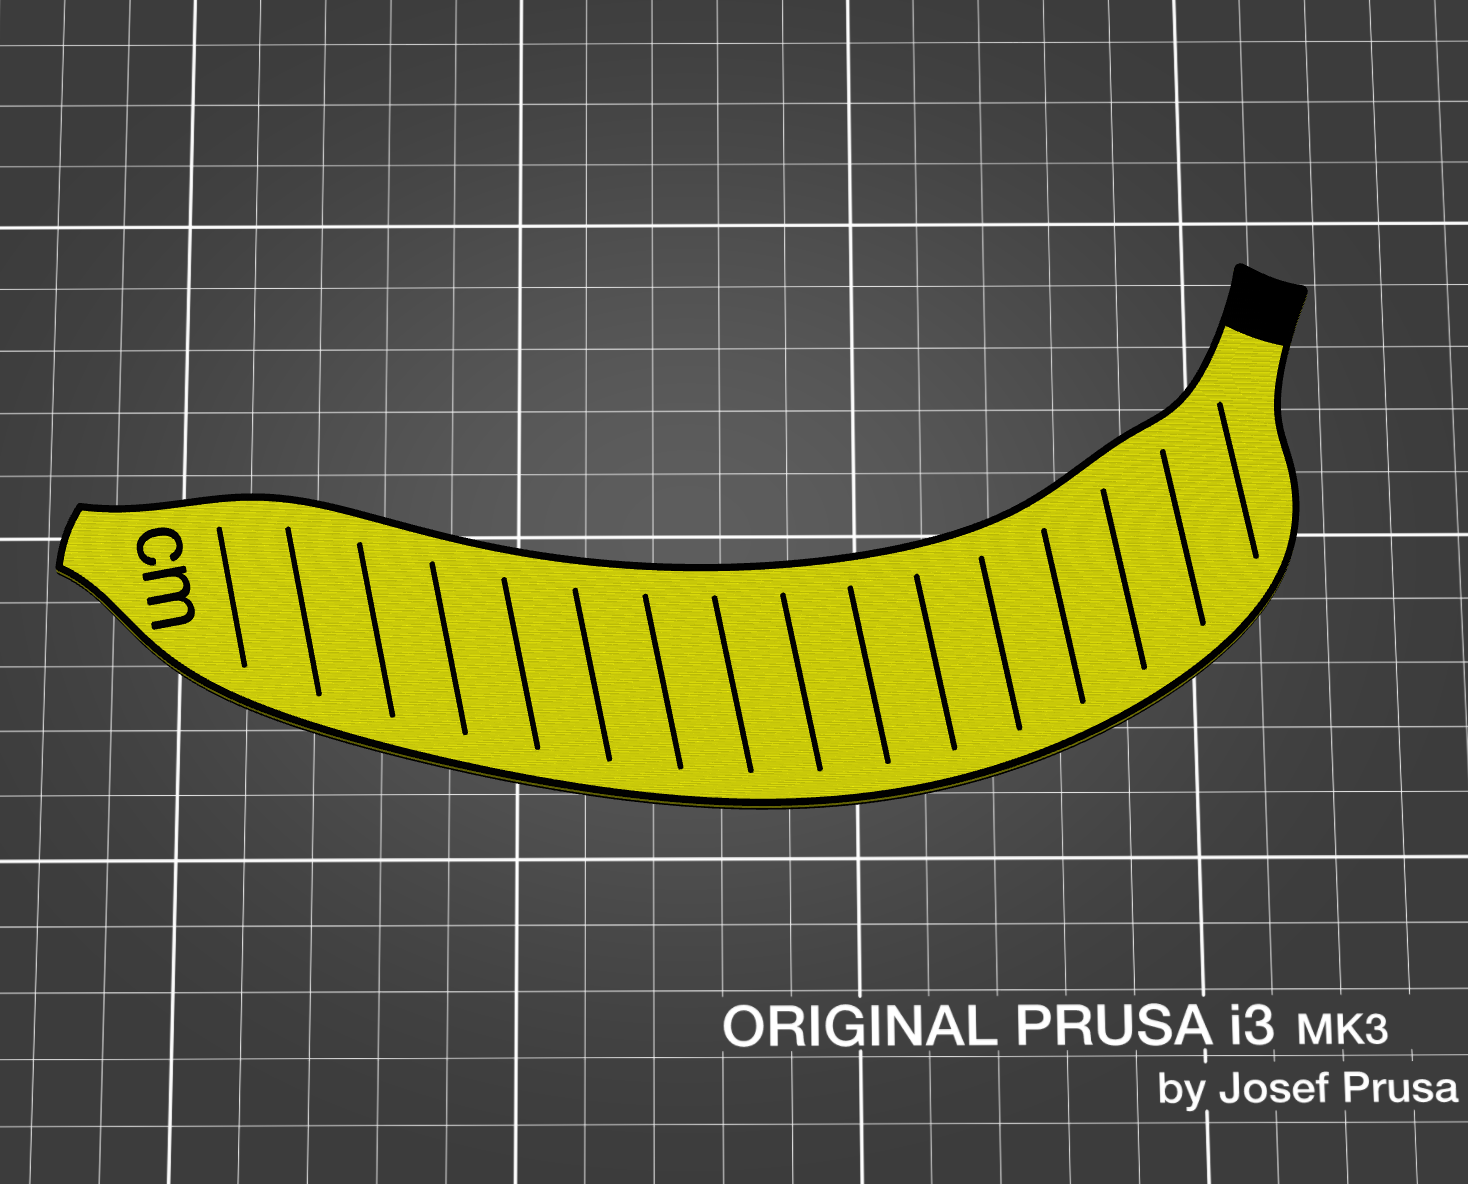 Universal Banana Scale